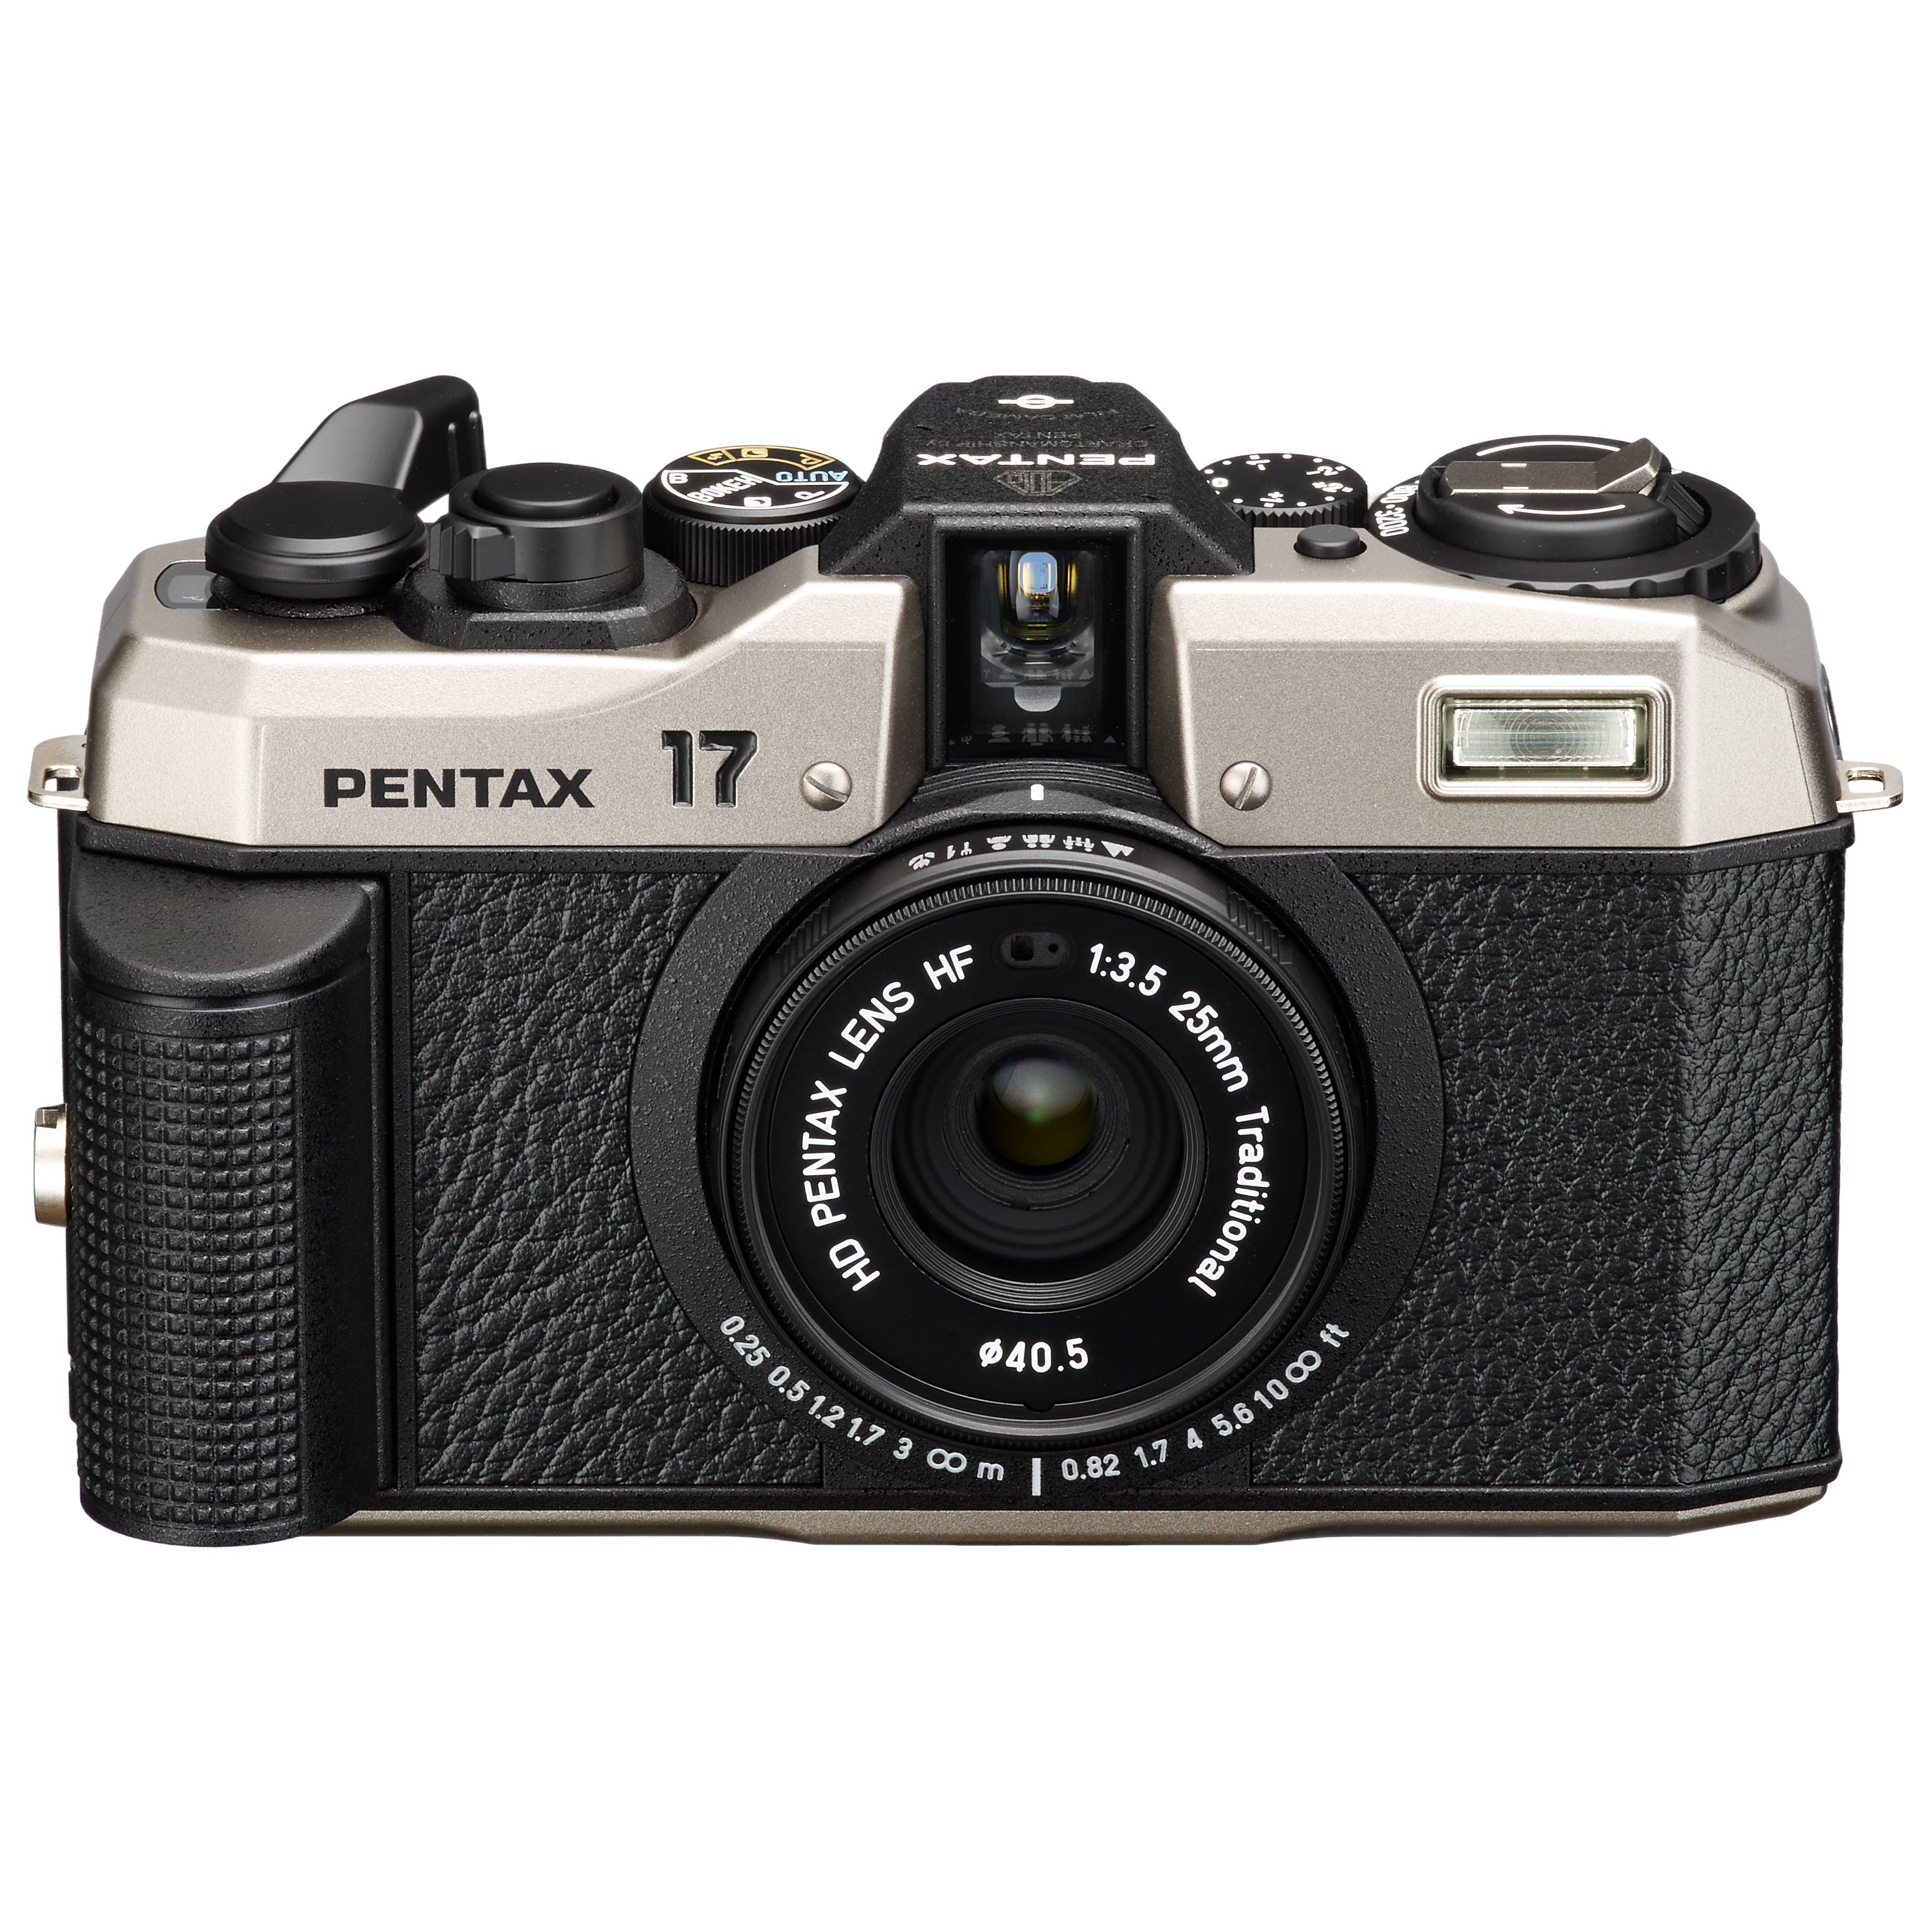 Introducing the Unique Capabilities of the Pentax 17 Camera